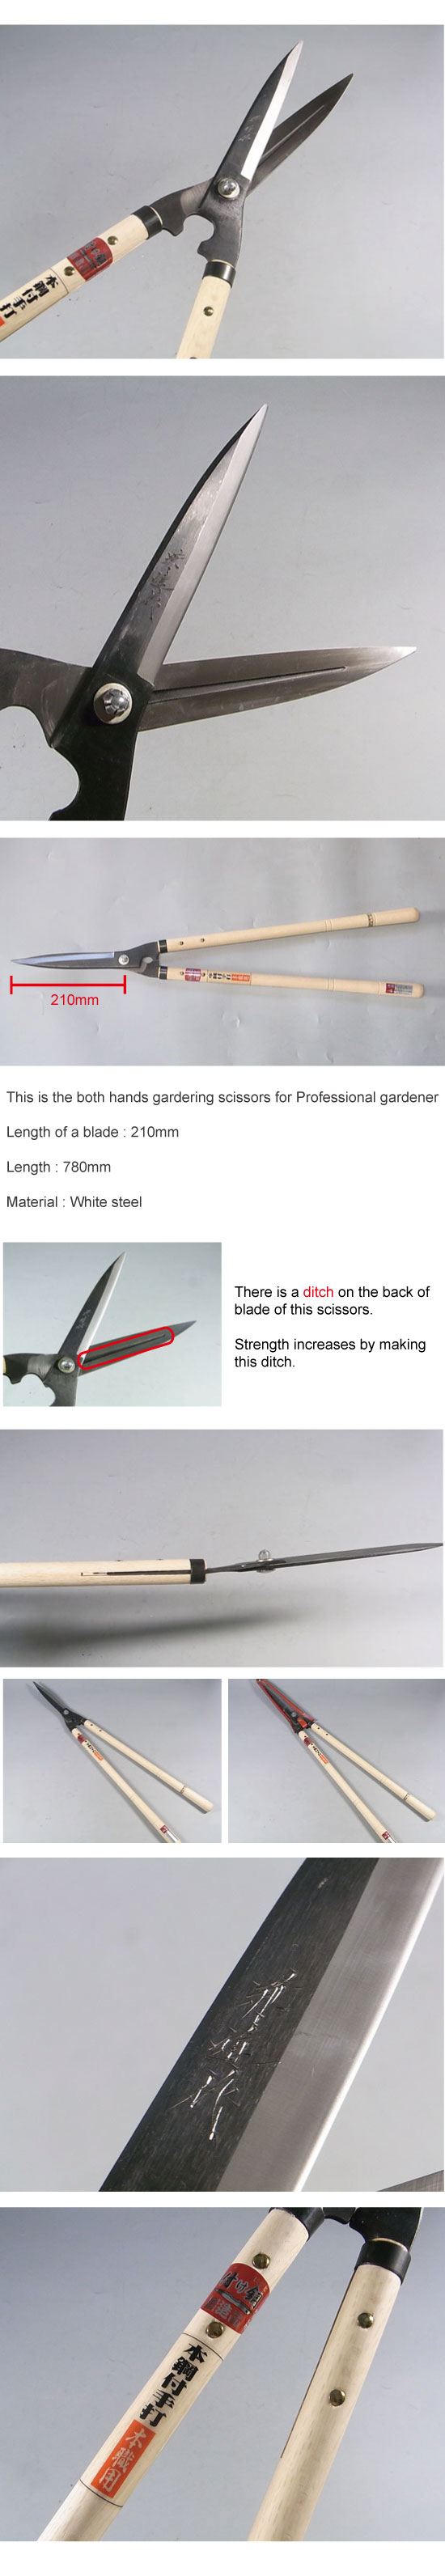 Both hands gardering scissors 210mm - White steel - [KANESHIN] "Length 780mm / Weight 1200g" No.3453